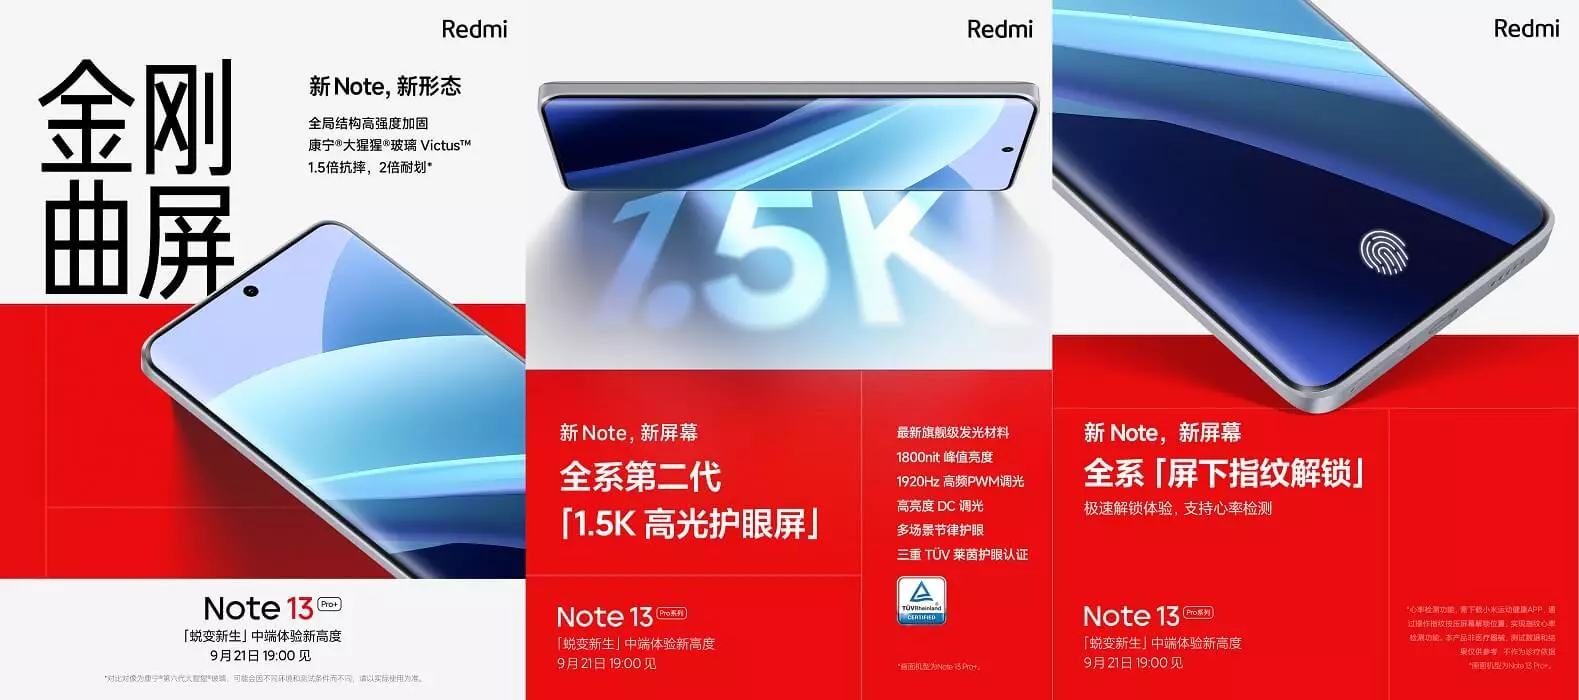 Redmi Note 13 Pro Plus display features cn.